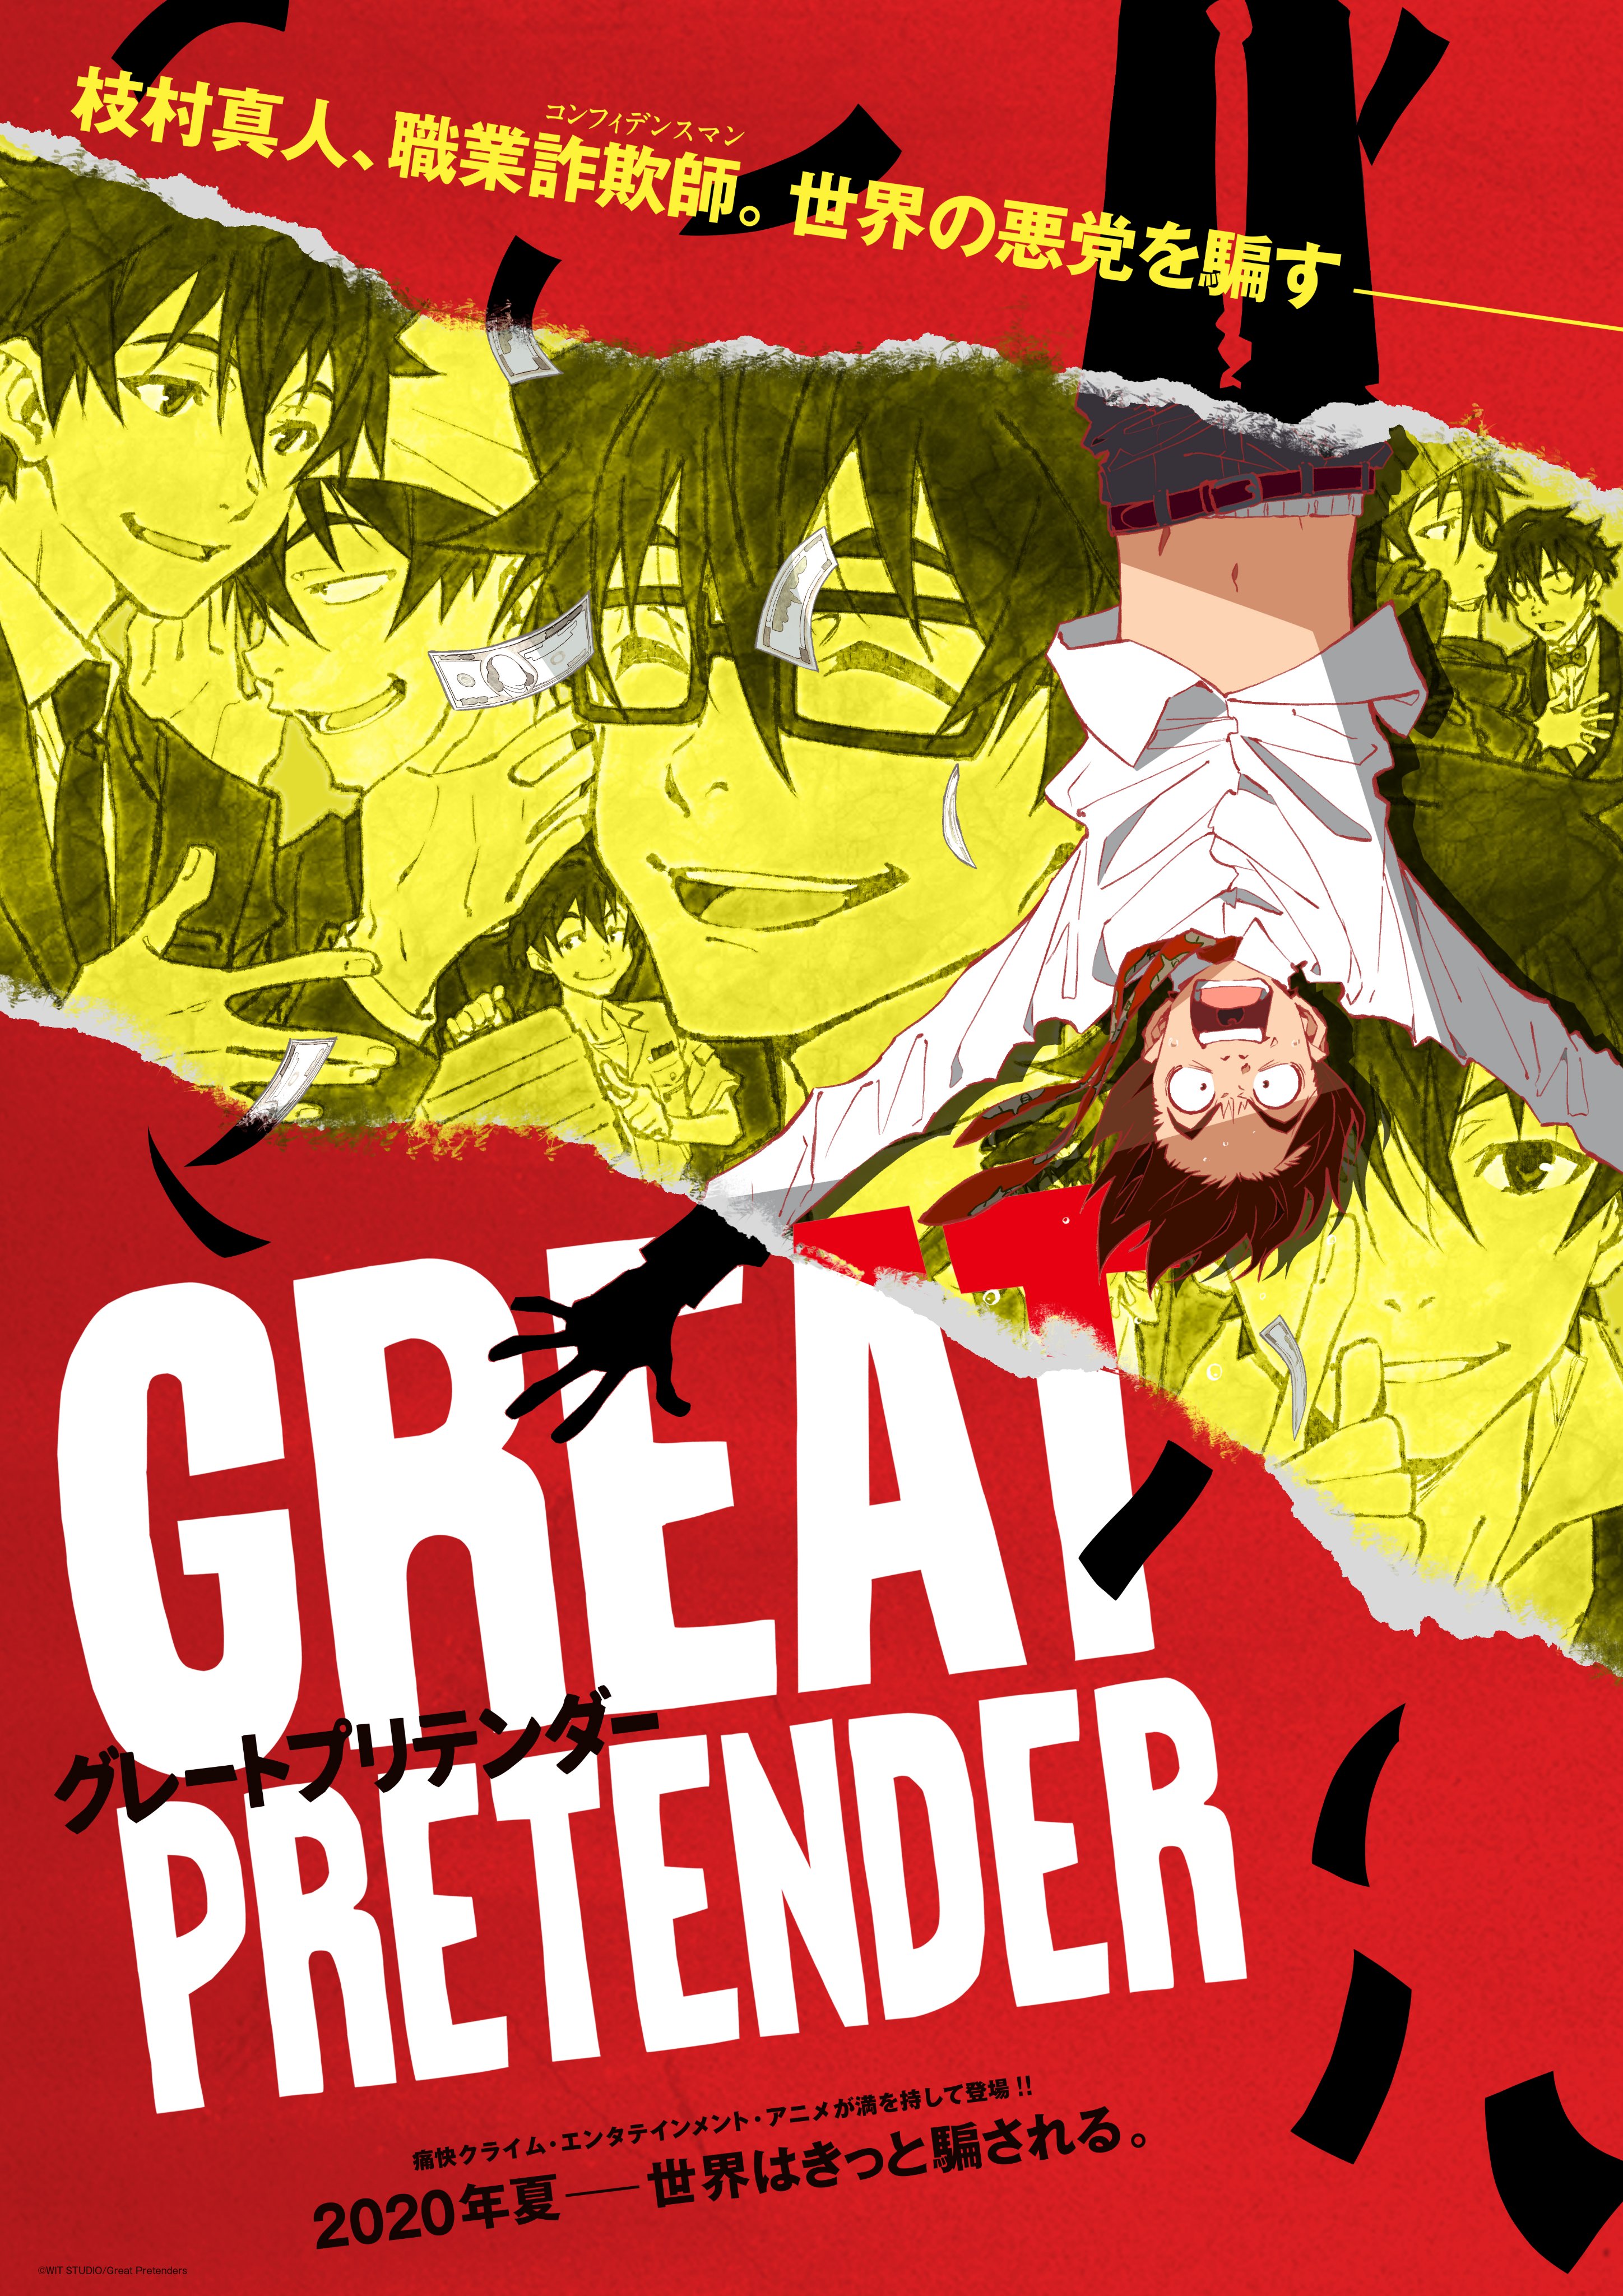 Great Pretender  18  The Pressure is the Reward  RABUJOI  An Anime Blog